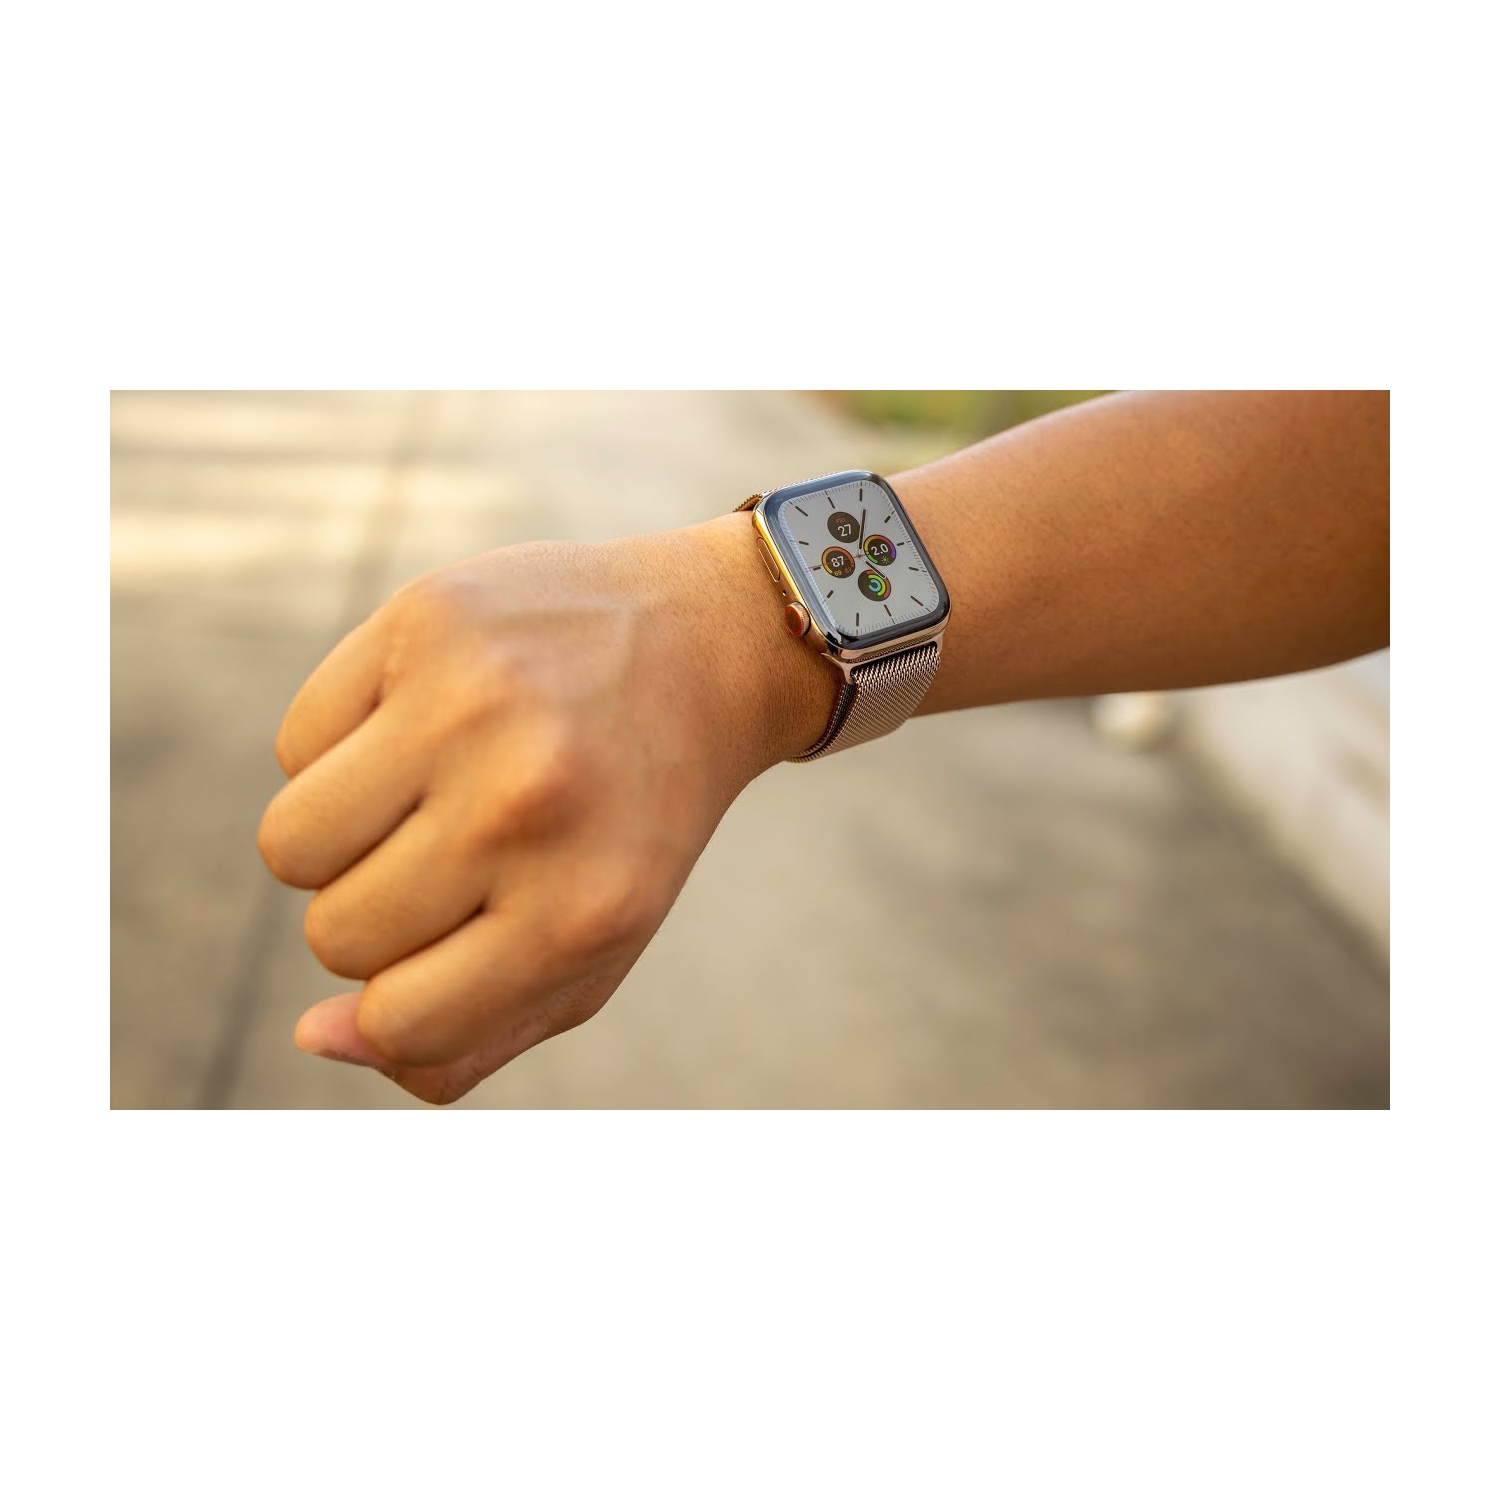 Apple Watch Series 5 (GPS) 40mm -Gold - Brand New